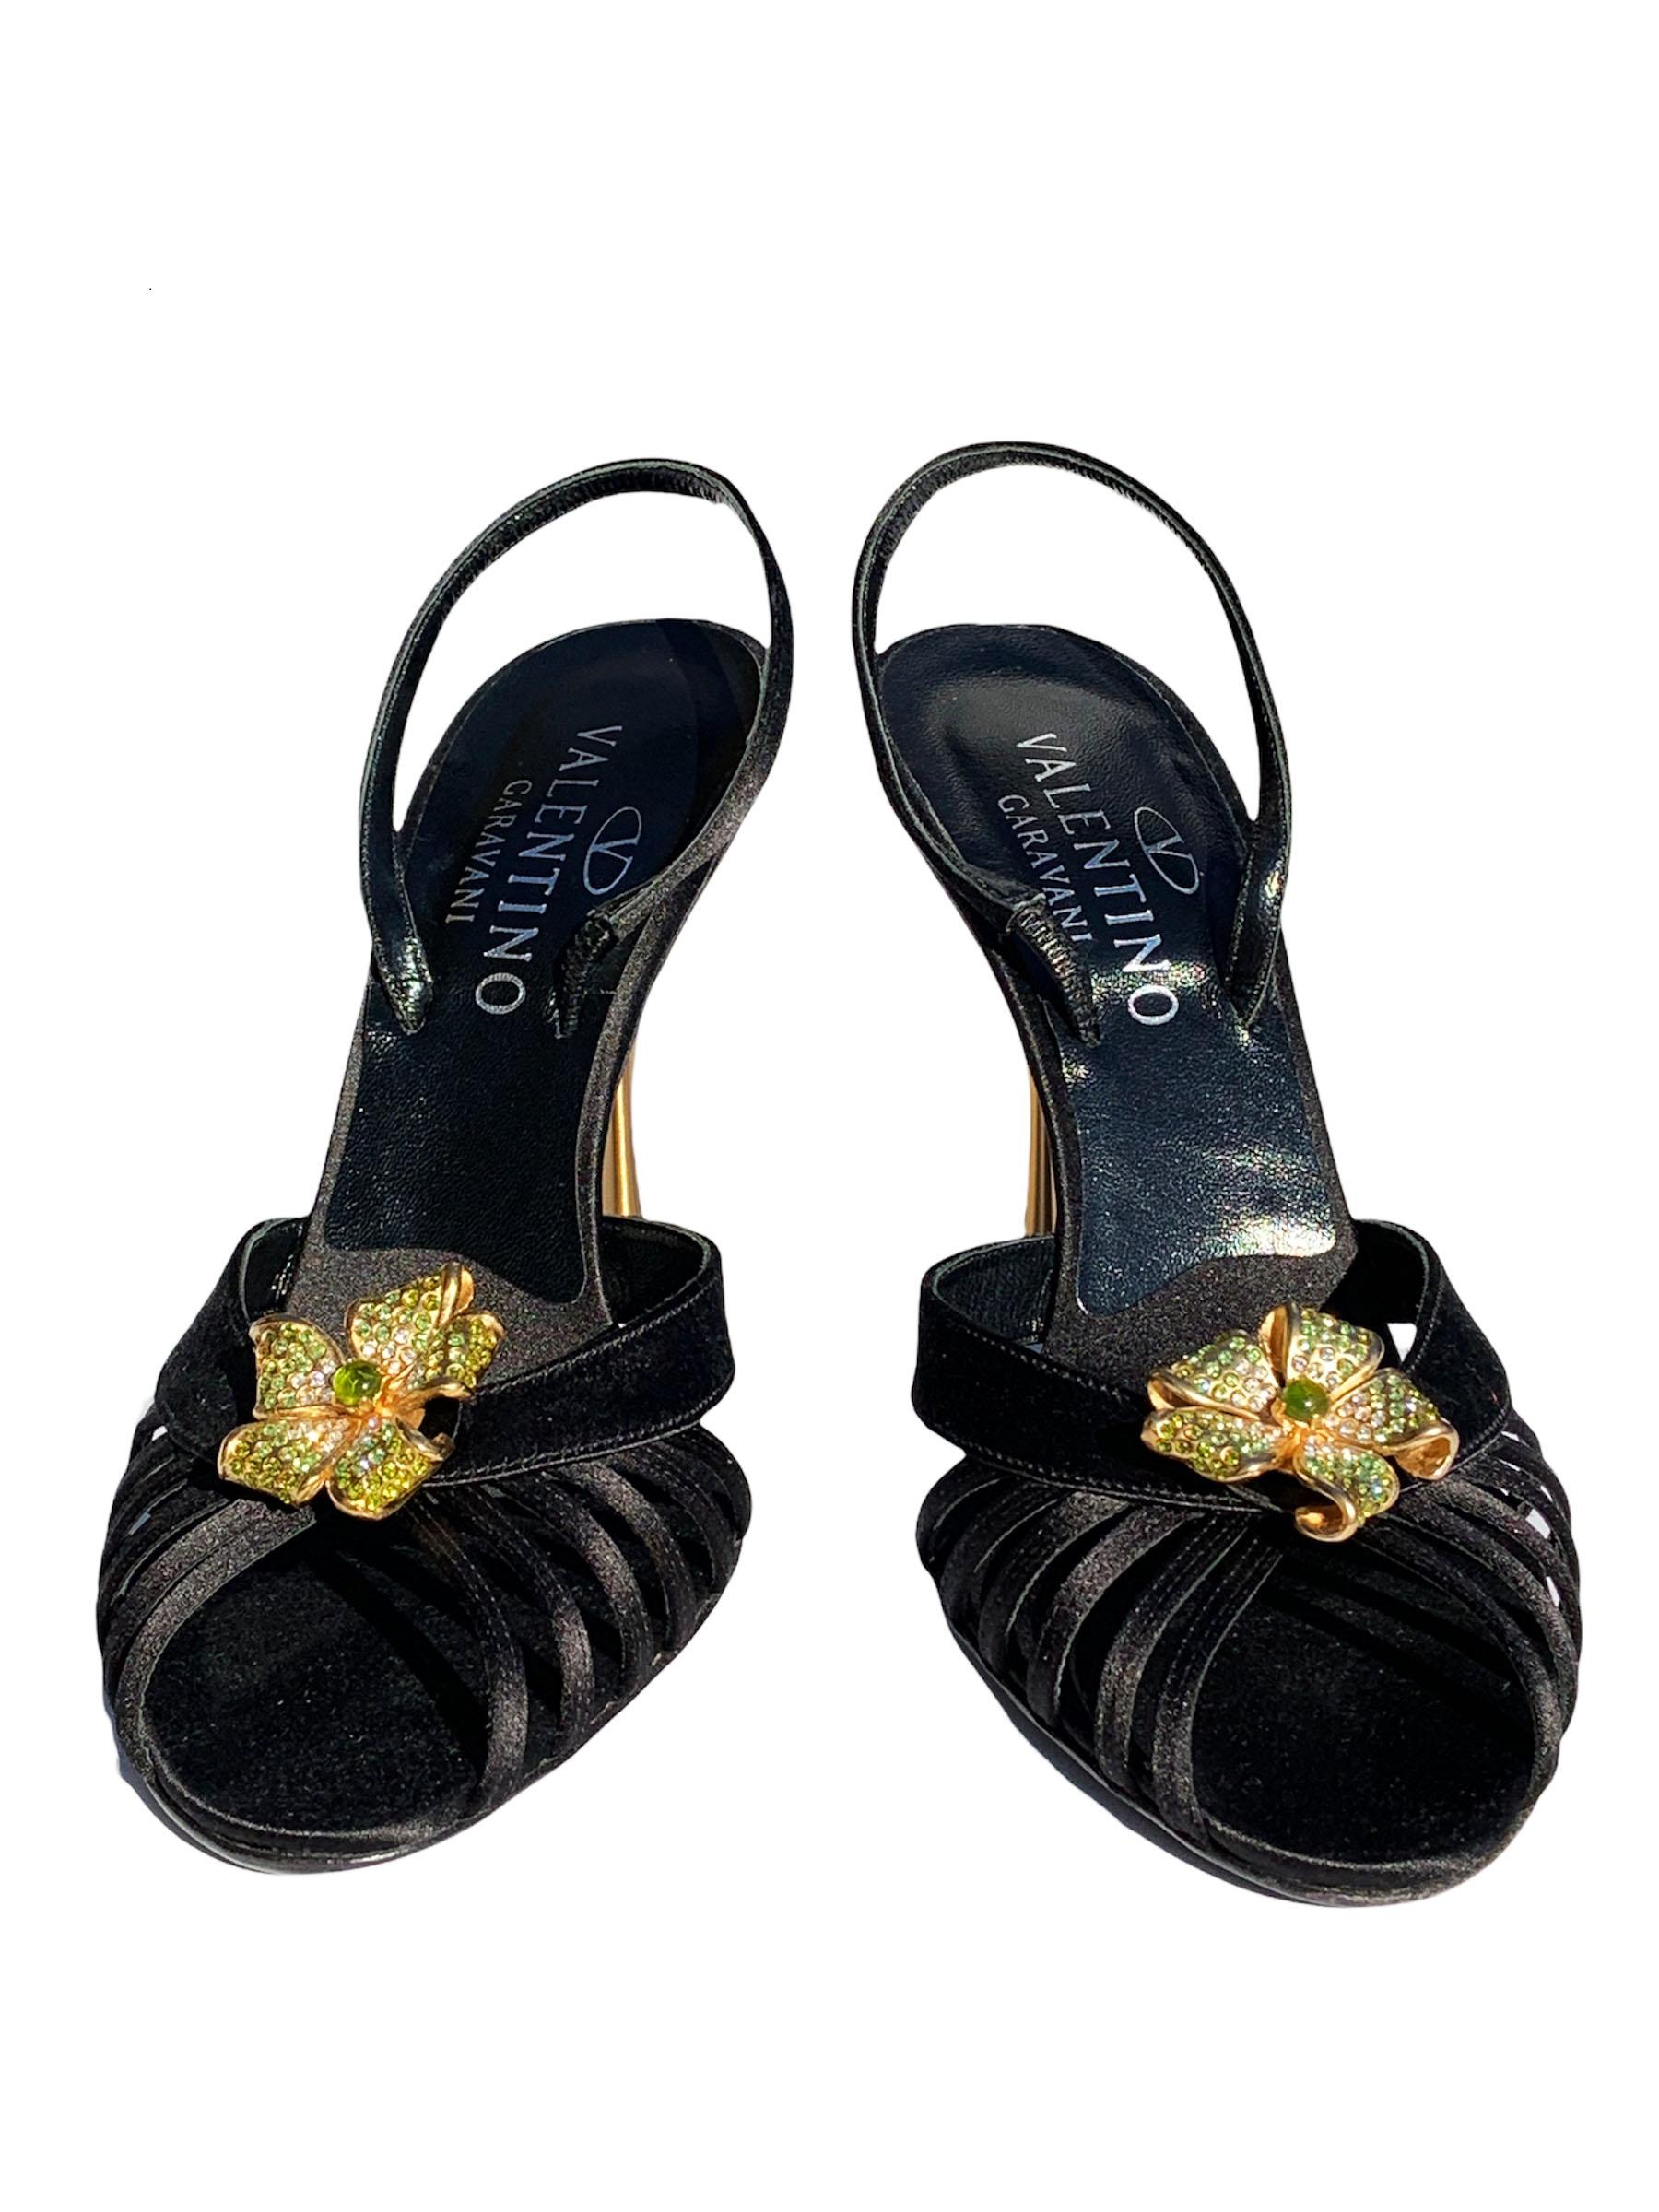 New Valentino Garavani 2006 Black Jeweled Shoes Sandals 38.5 + Matching Clutch  For Sale 3